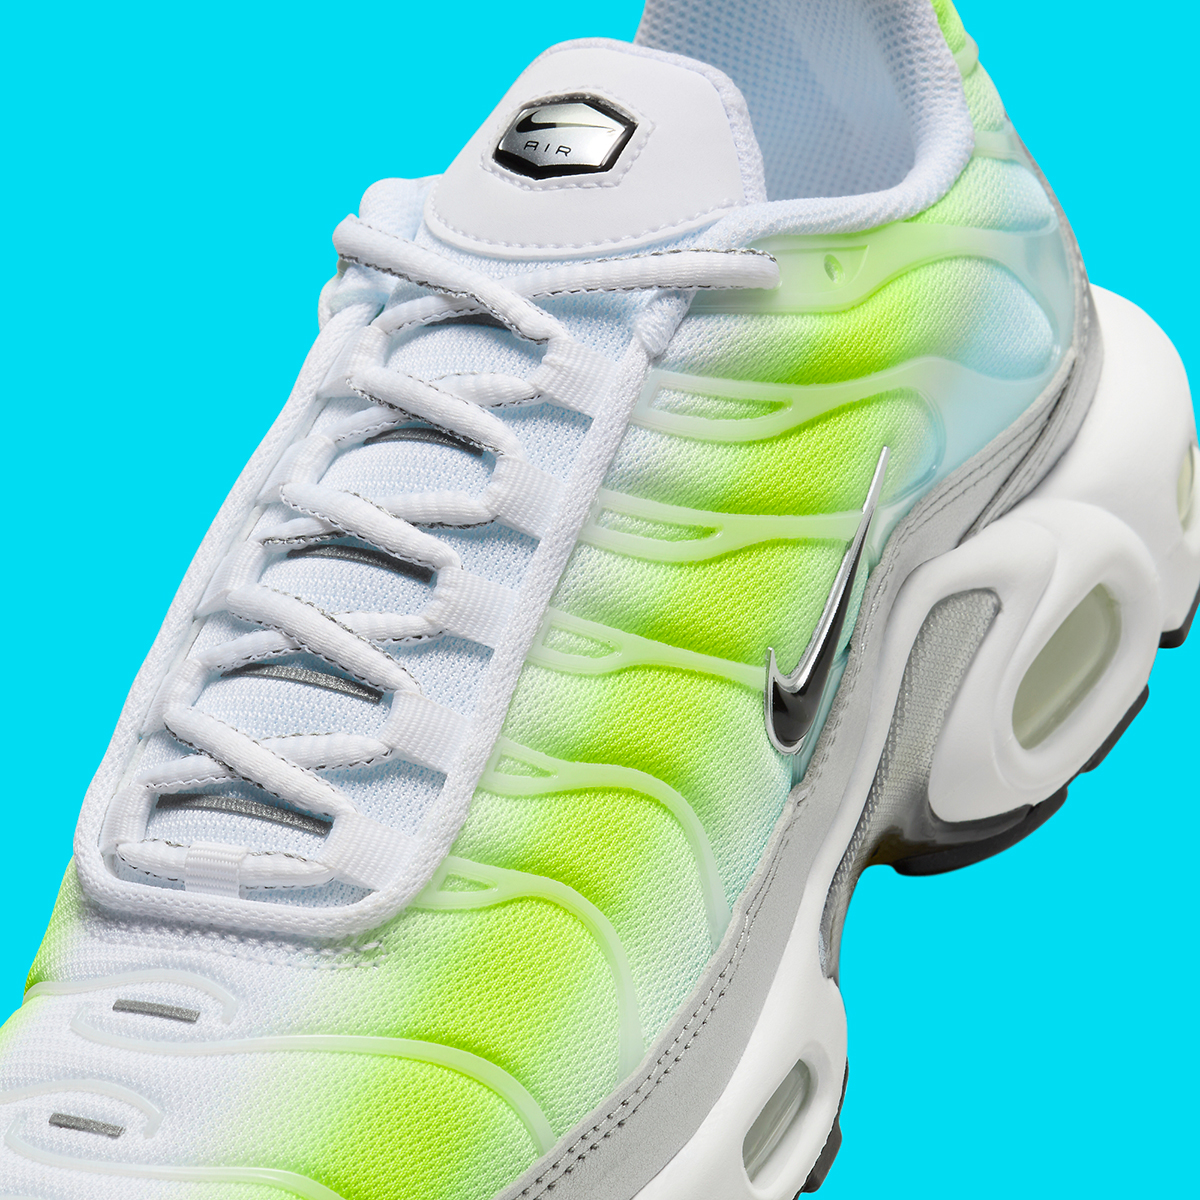 Nike Air Penny 5 on Nice Kicks Silver Neon Aquarius Blue Hj9574 100 2